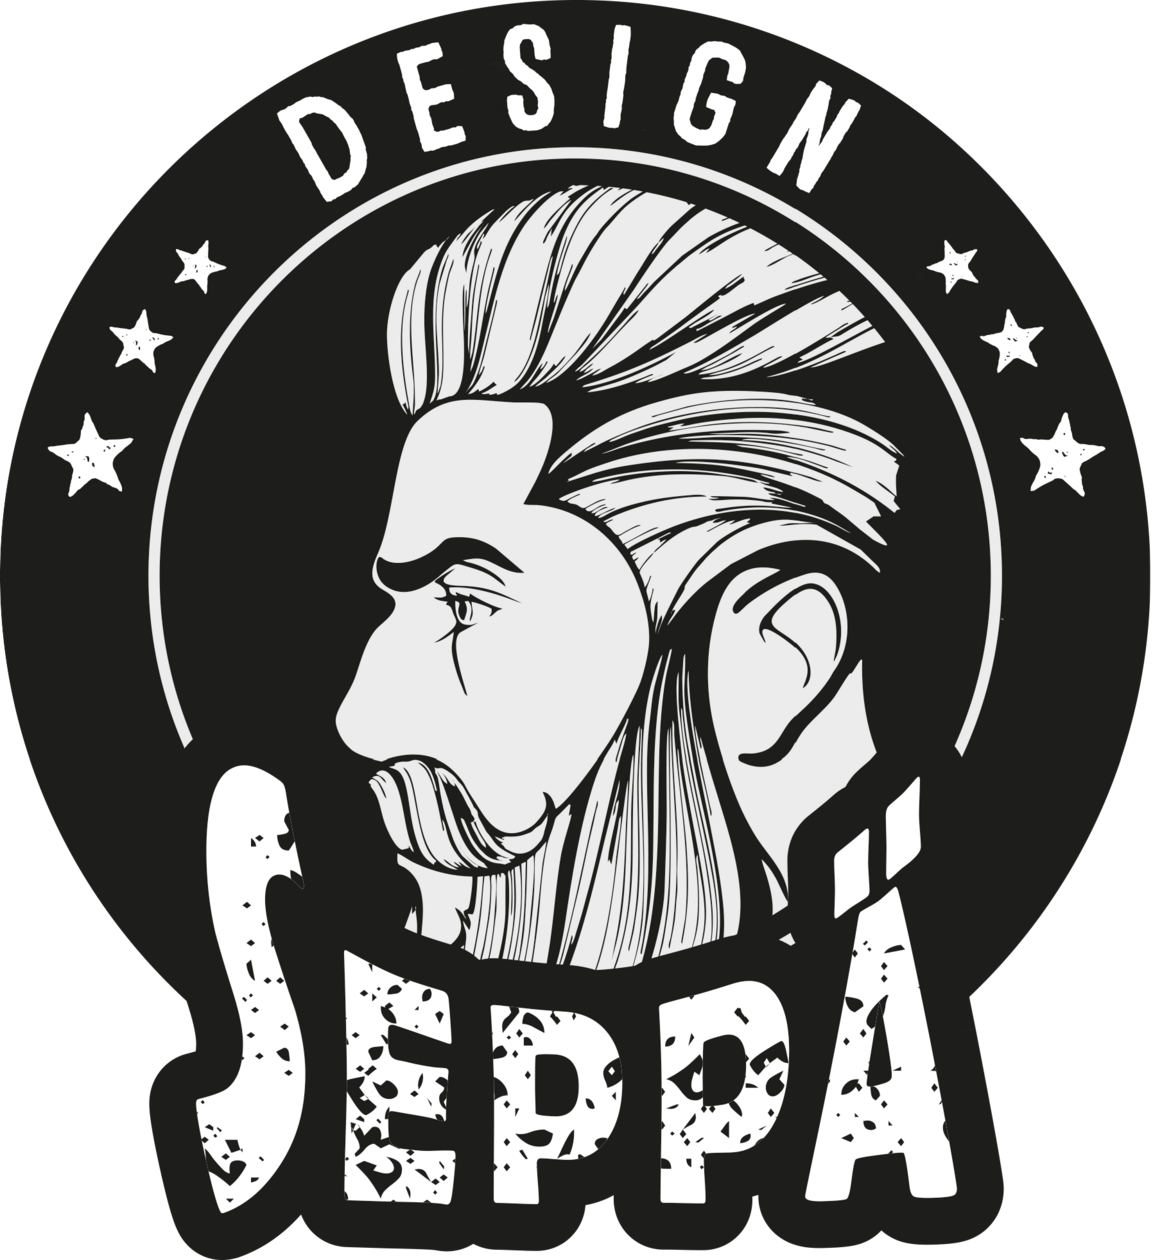 Images Seppä design